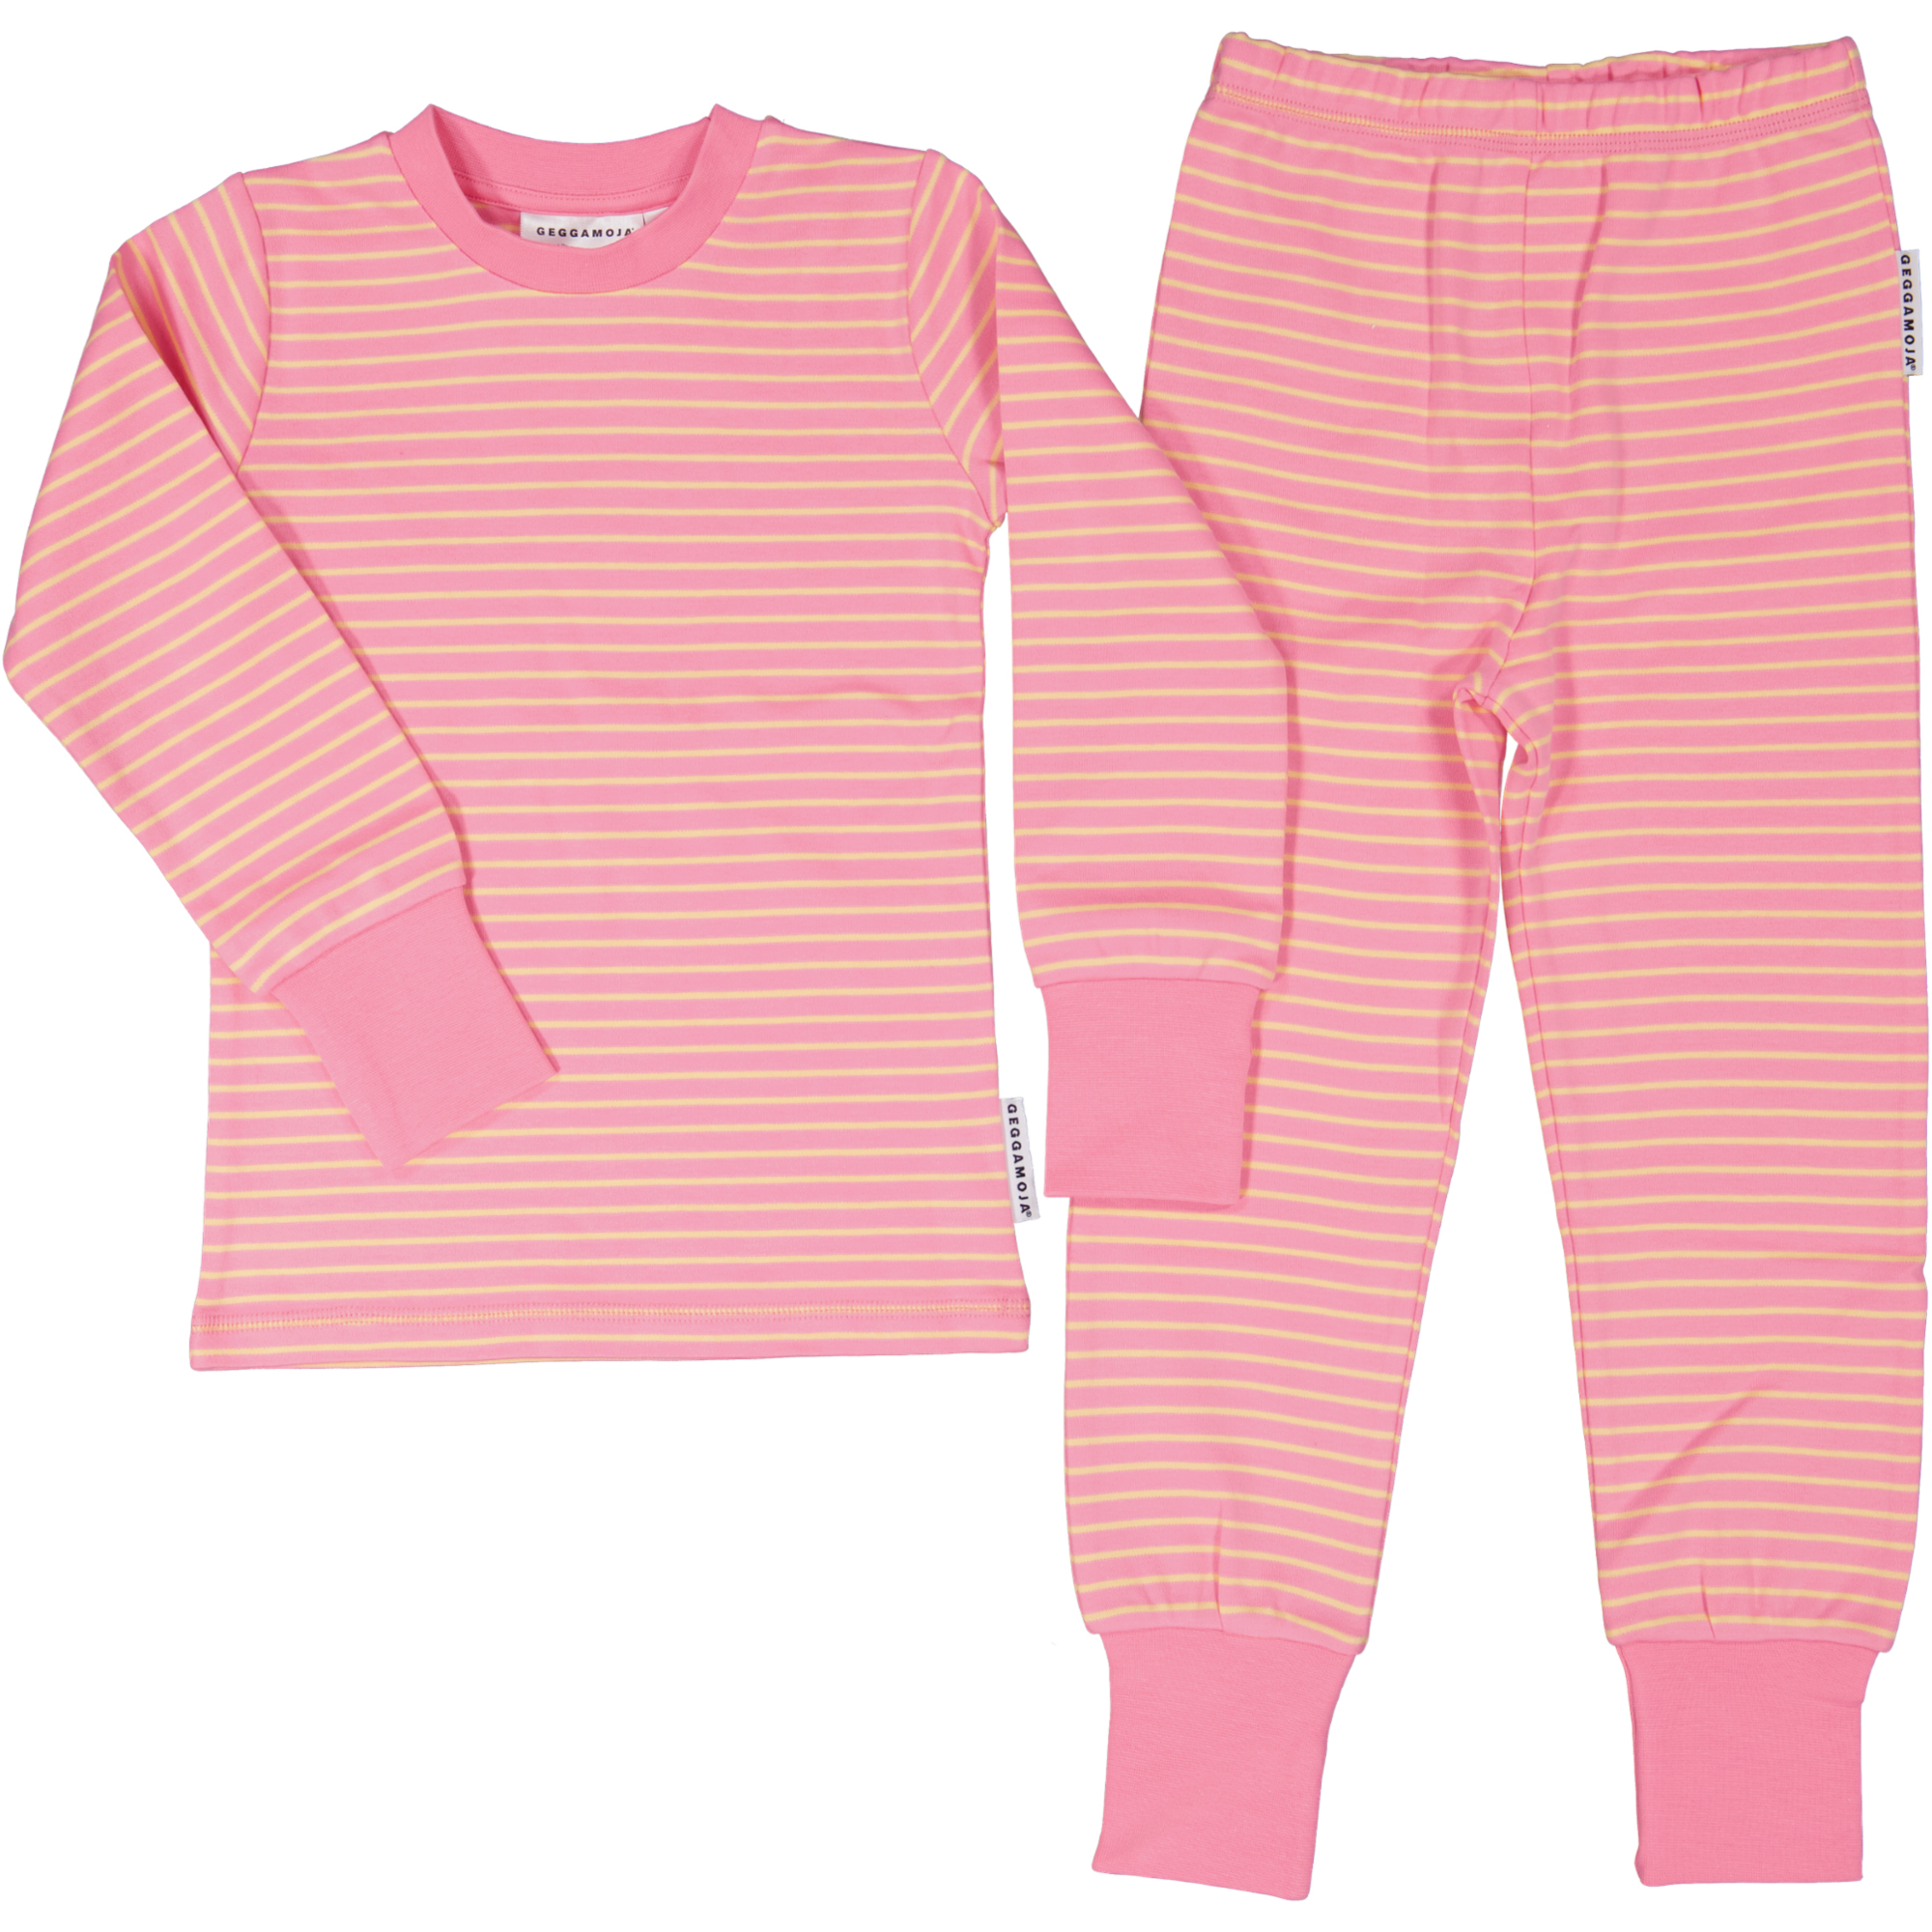 Two pcs pyjamas Pink/yellow